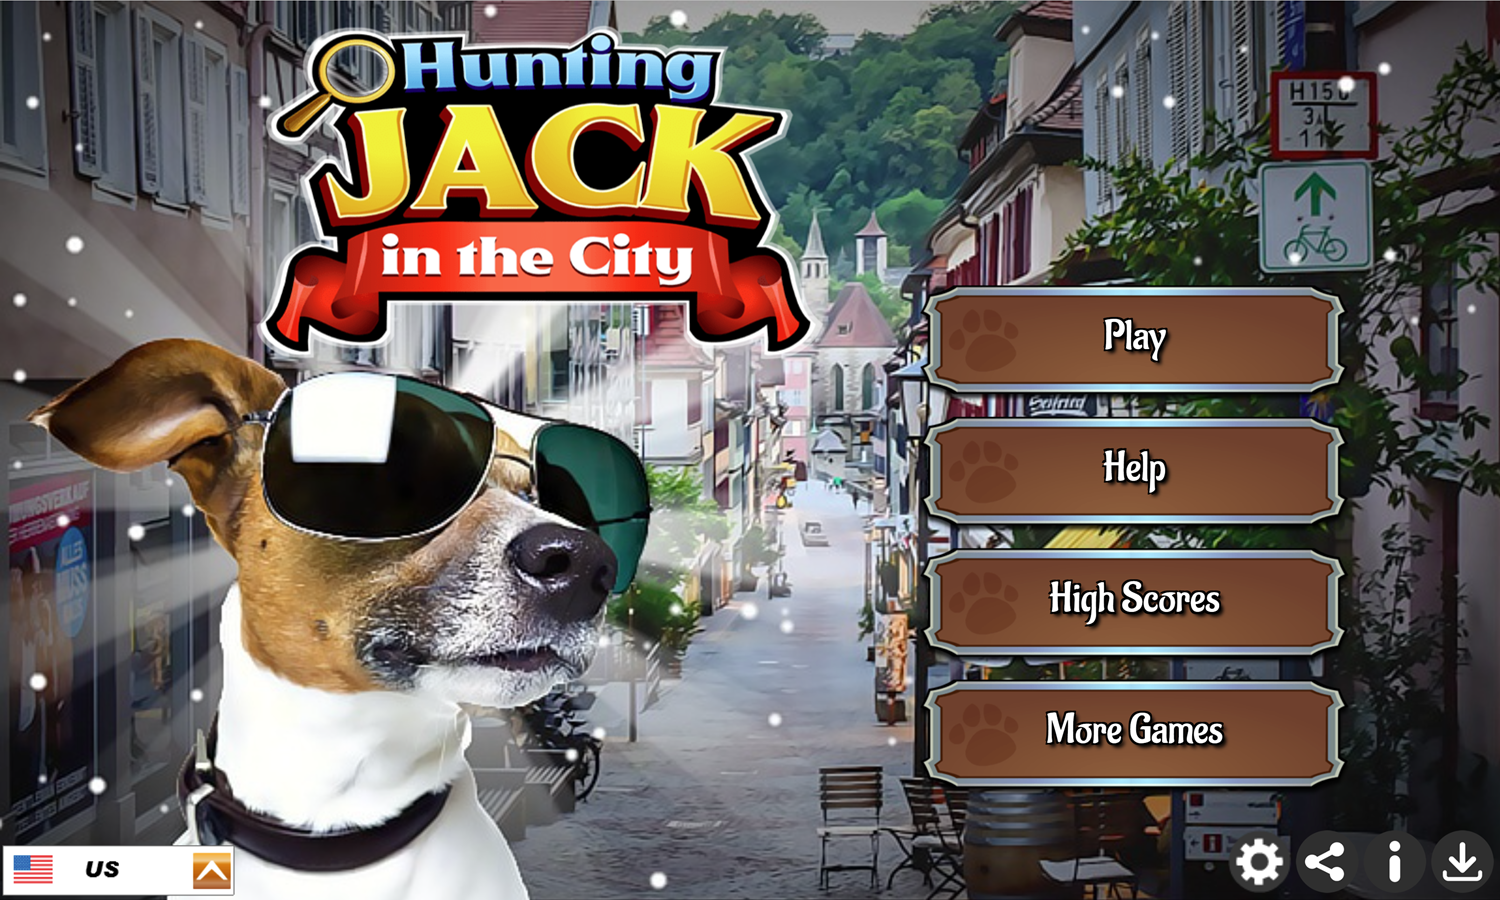 Hunting Jack in the City Game Welcome Screen Screenshot.